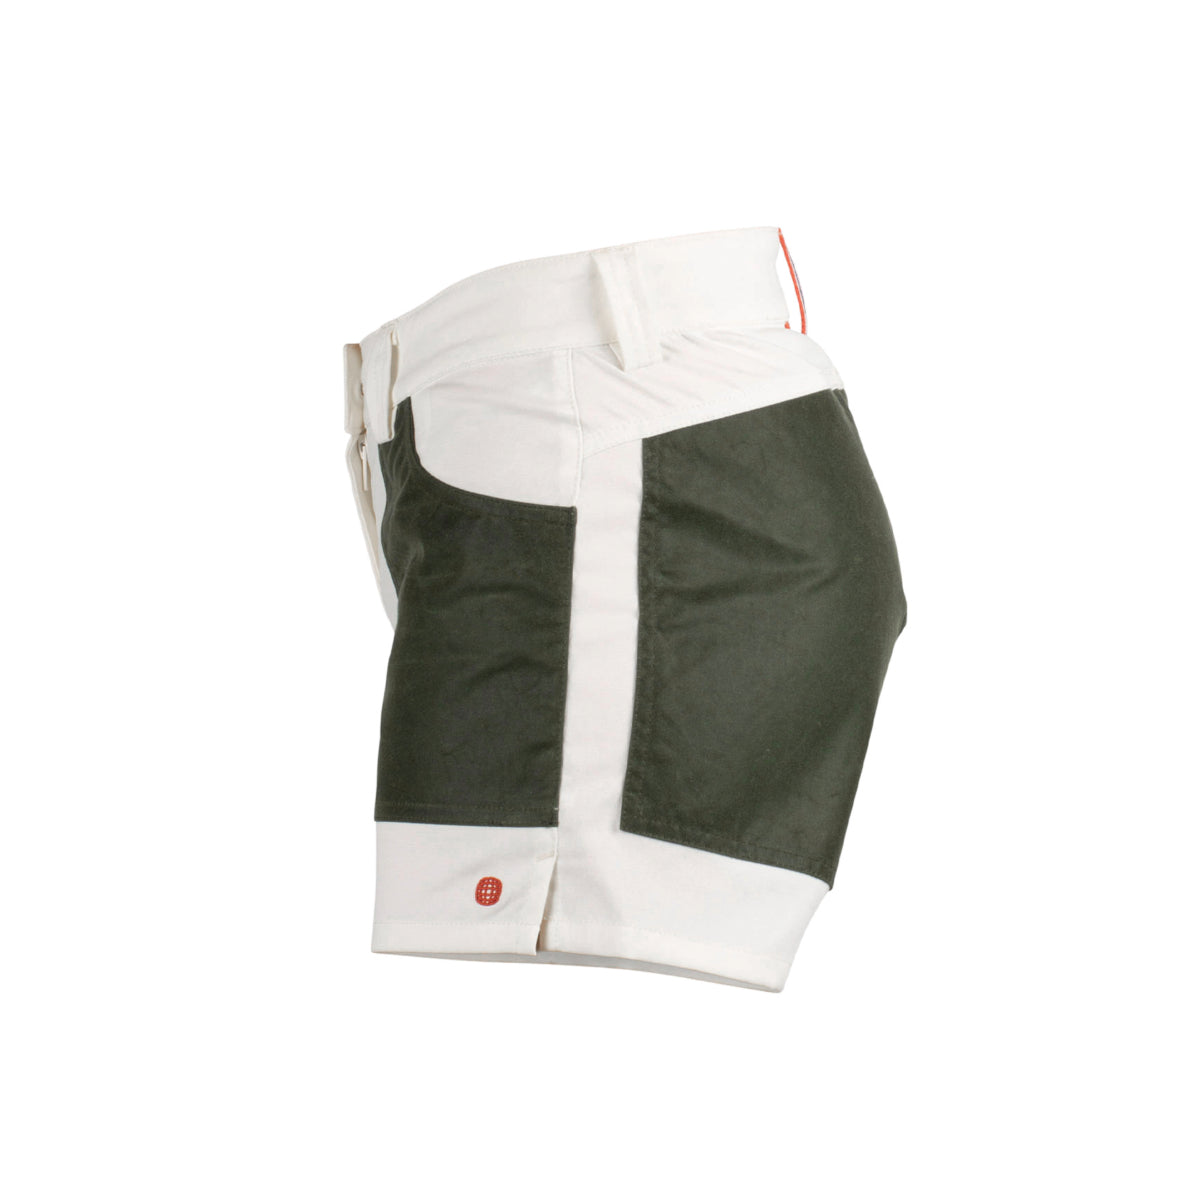 Amundsen Sports - Women's 5 Incher Field Shorts - Offwhite / Green